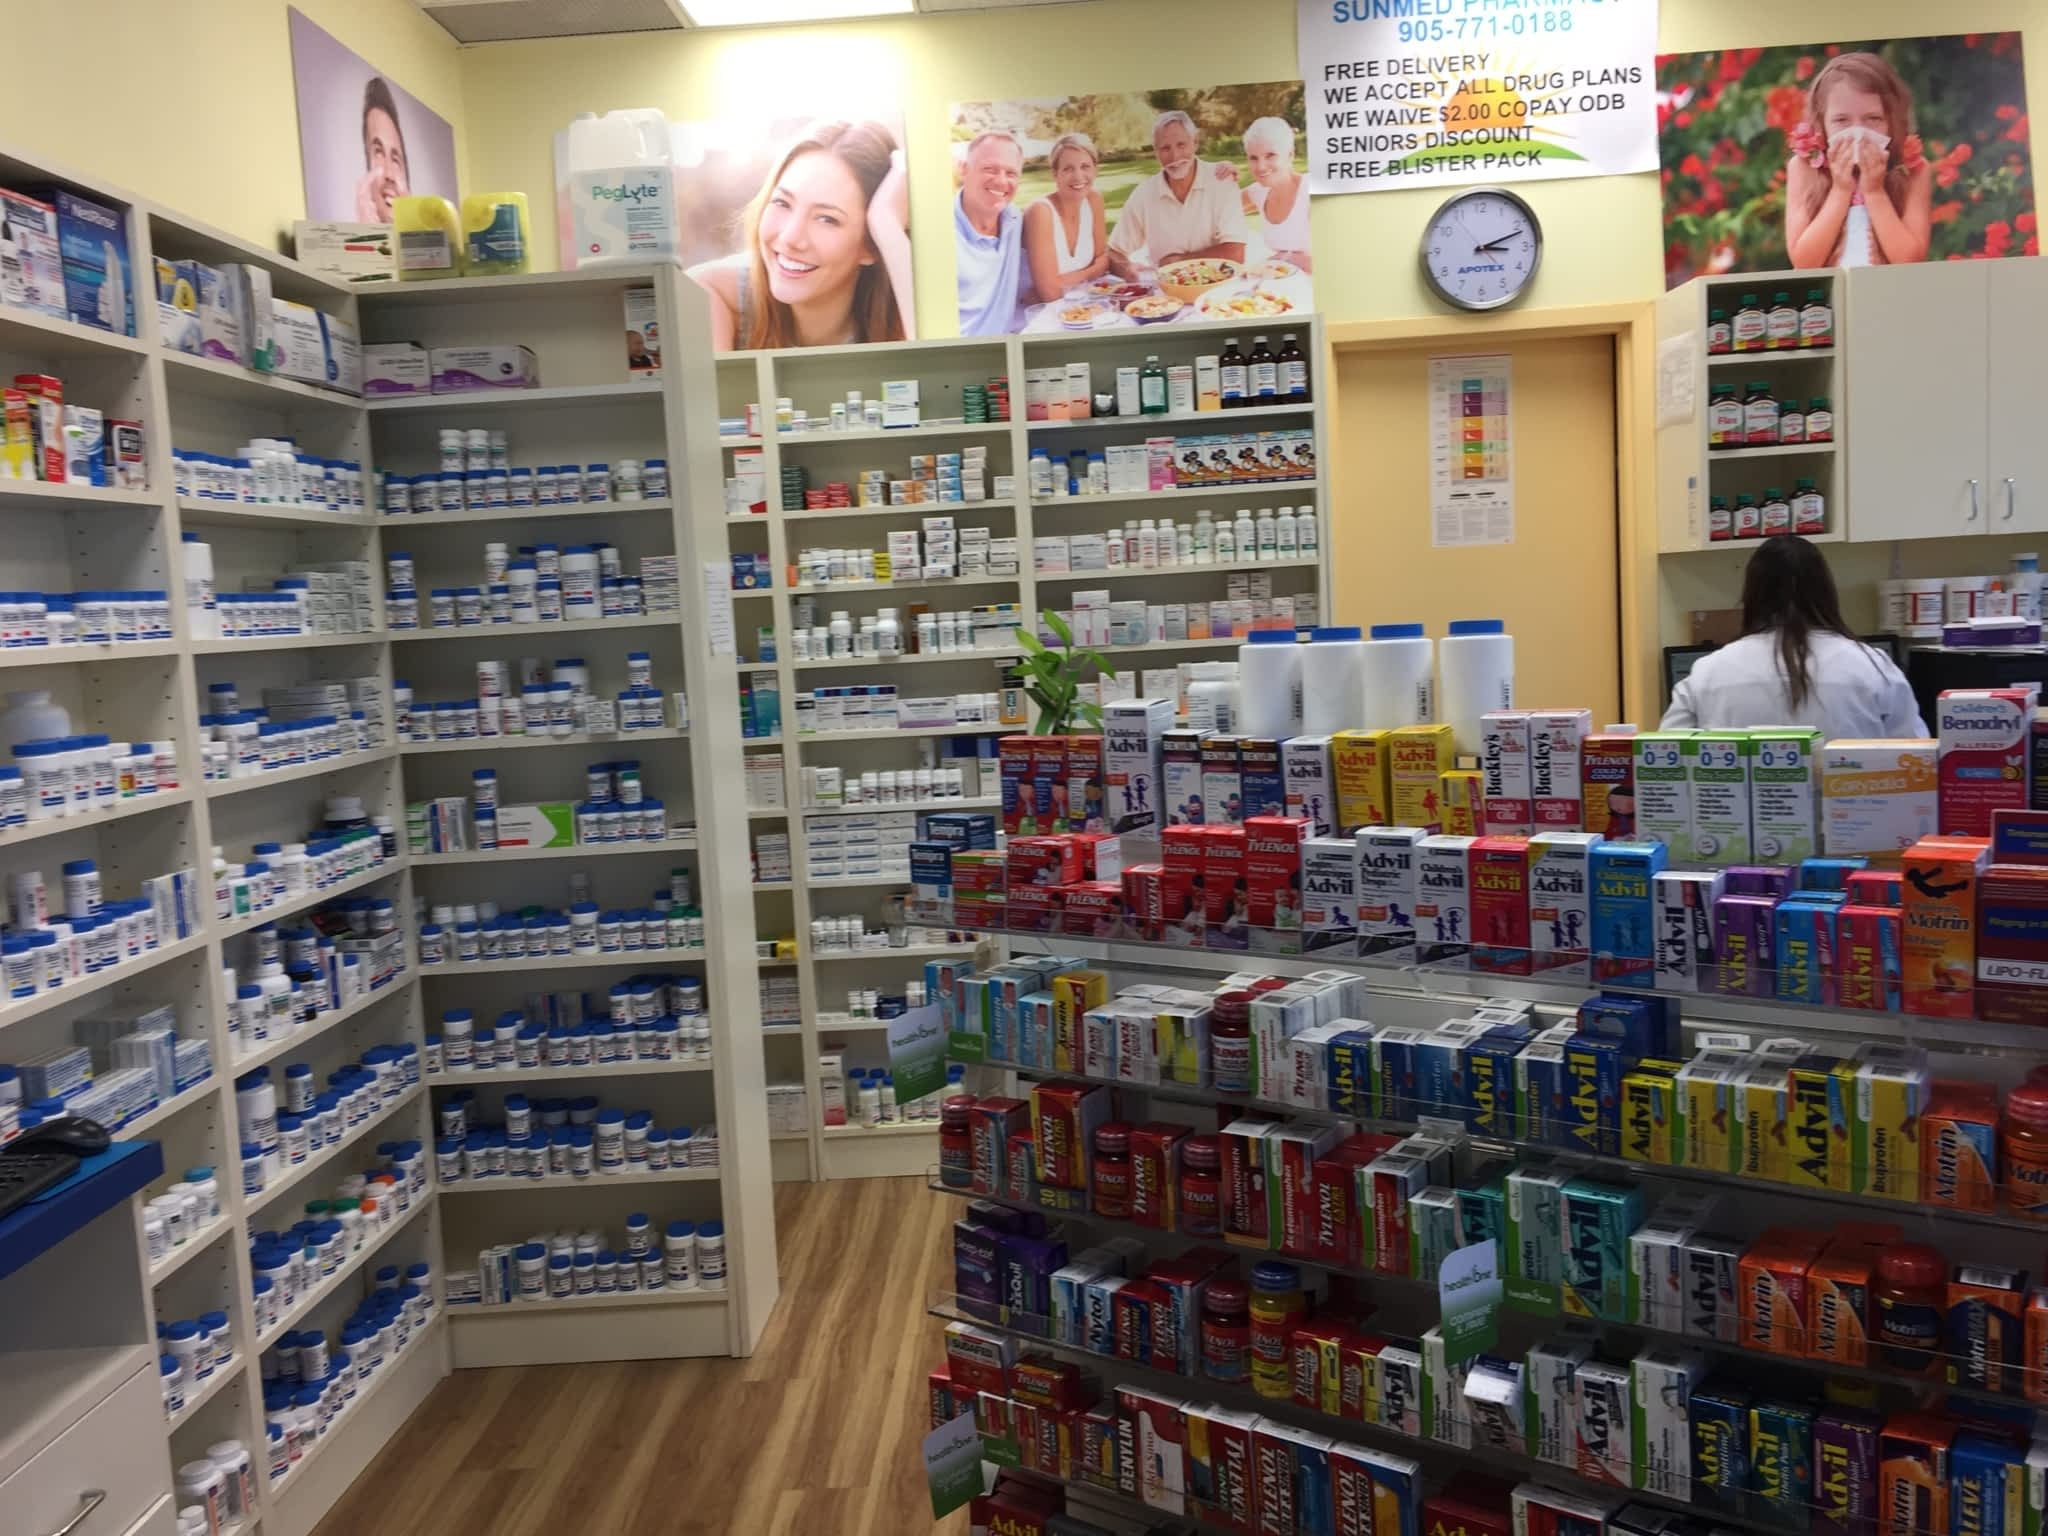 photo Sunmed Pharmacy